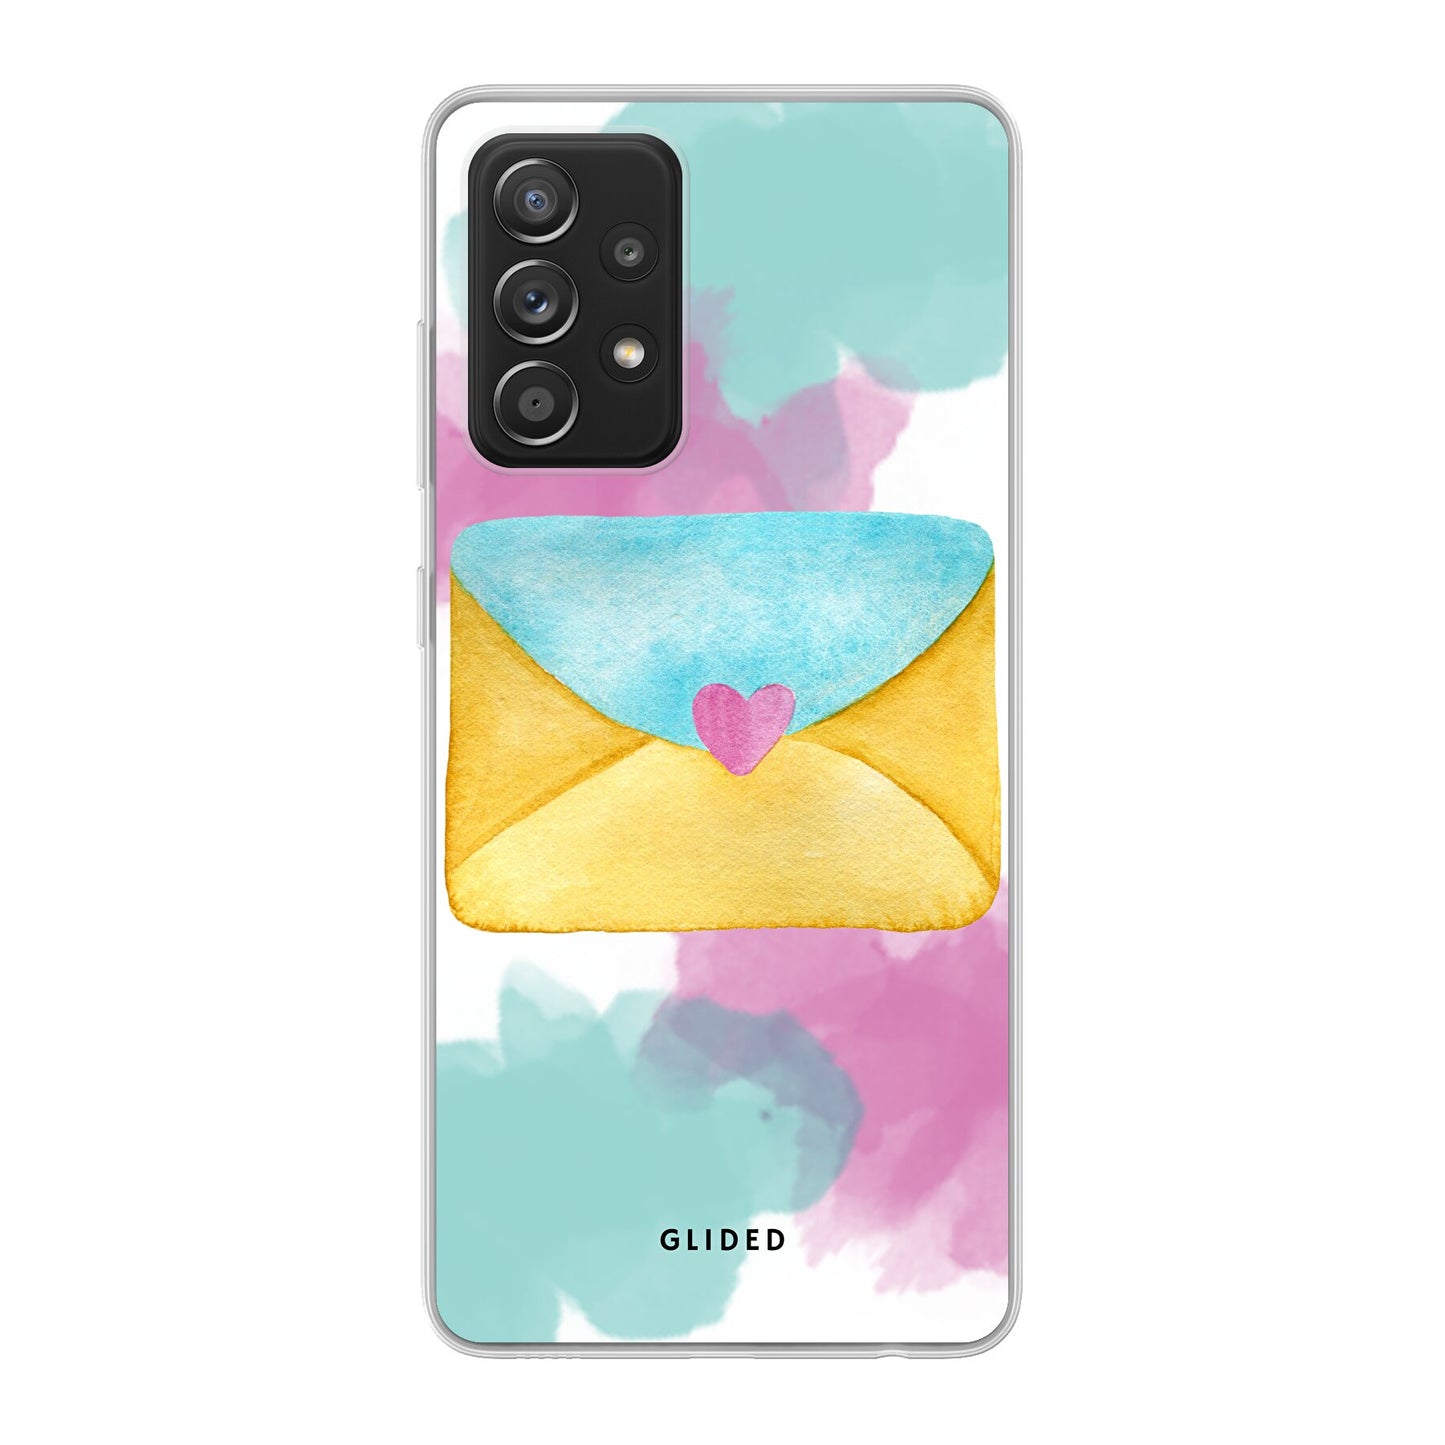 Envelope - Samsung Galaxy A52 / A52 5G / A52s 5G - Hard Case